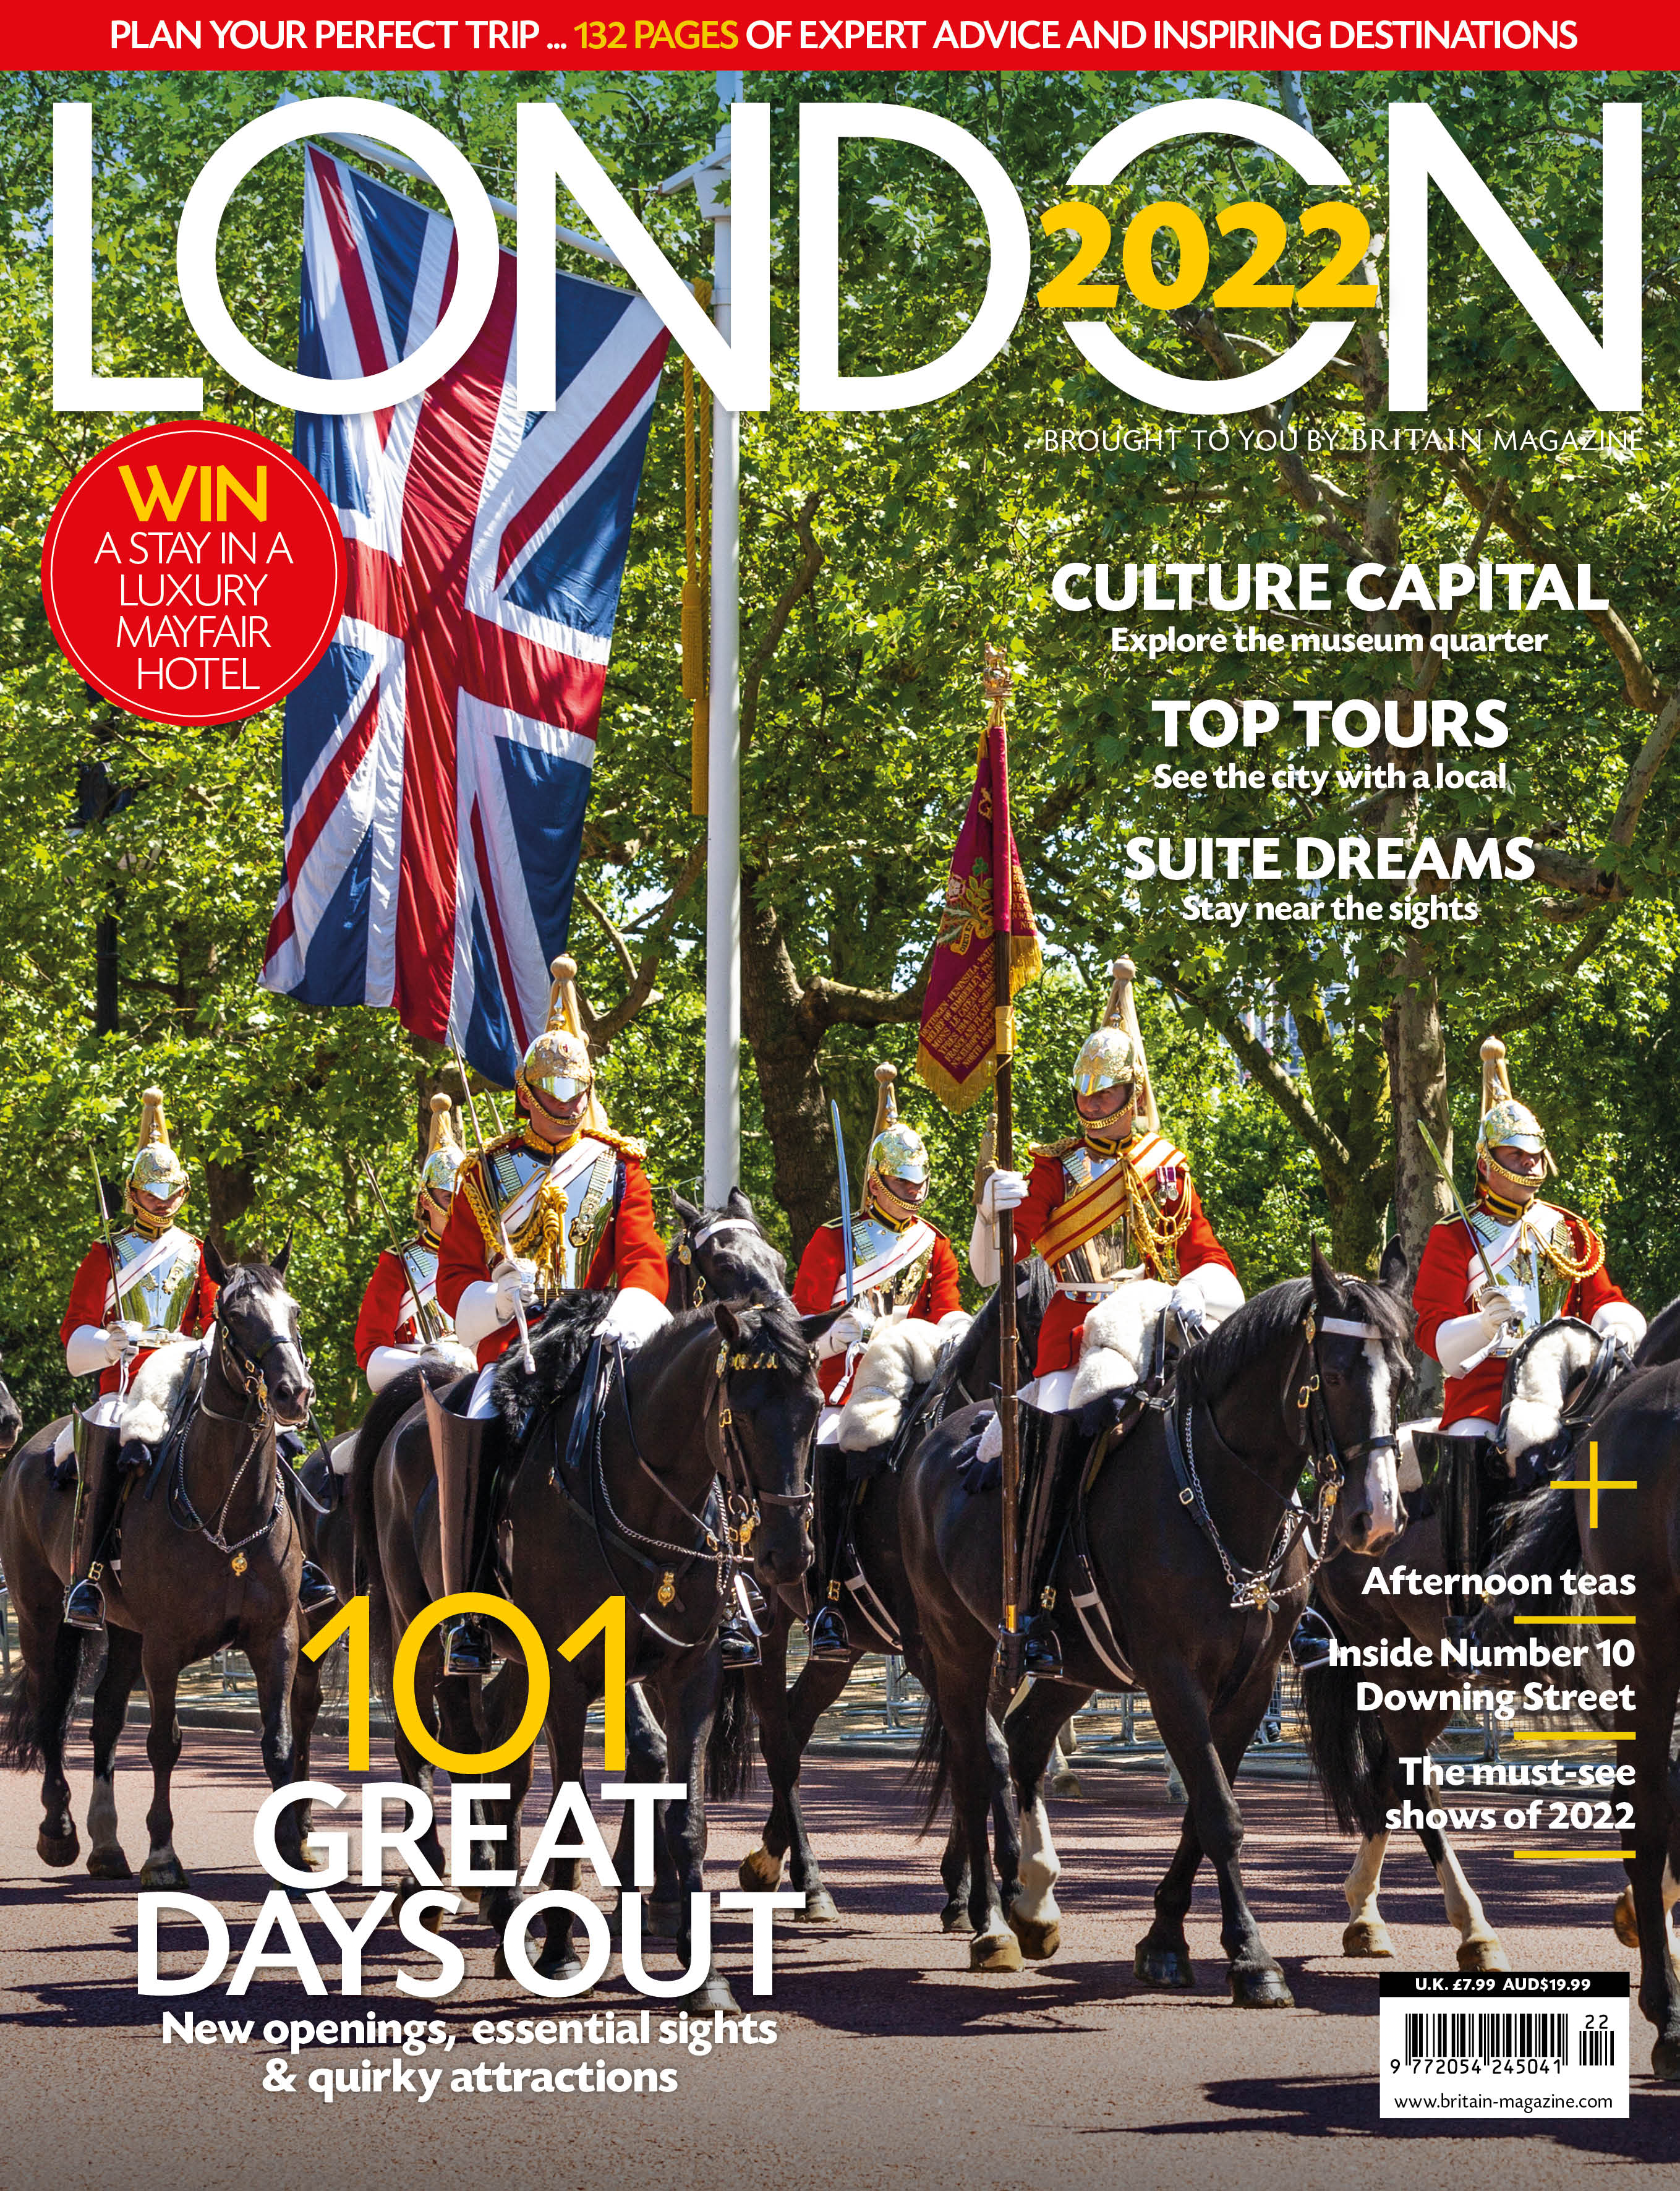 London Guide 2022